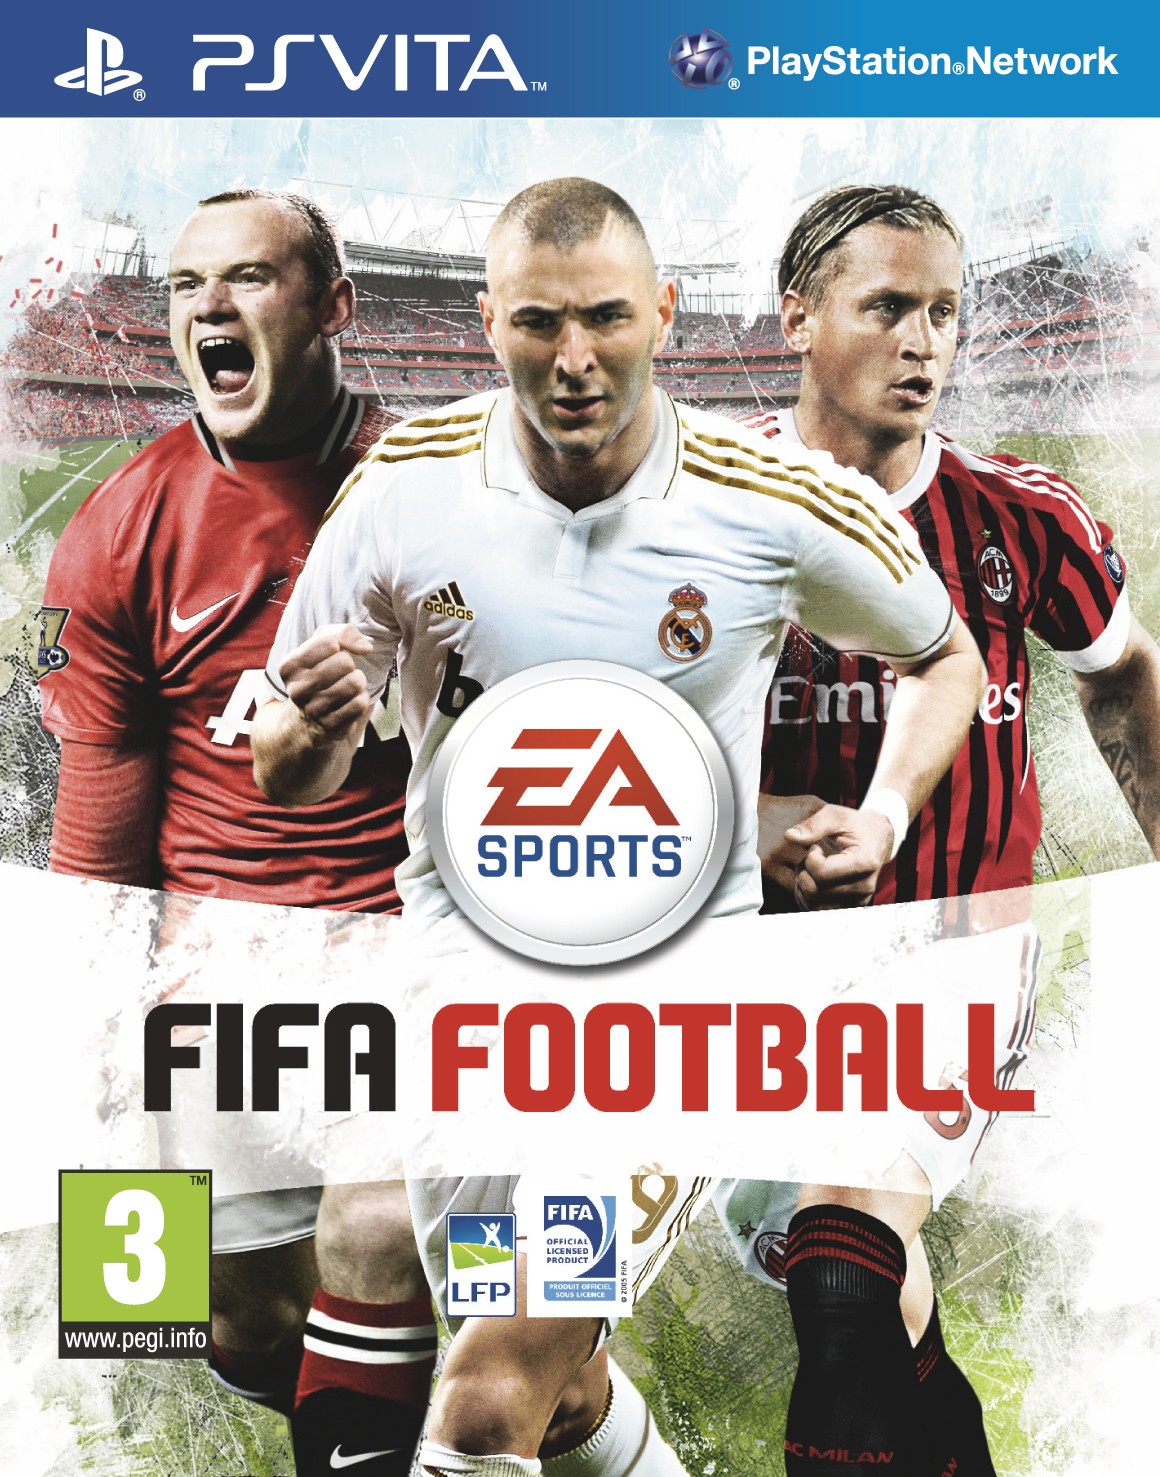 Fifa vita. FIFA 12 PS Vita. EA Sports FIFA Football PS Vita. FIFA Football PS Vita обложка. Последняя FIFA на PS Vita.